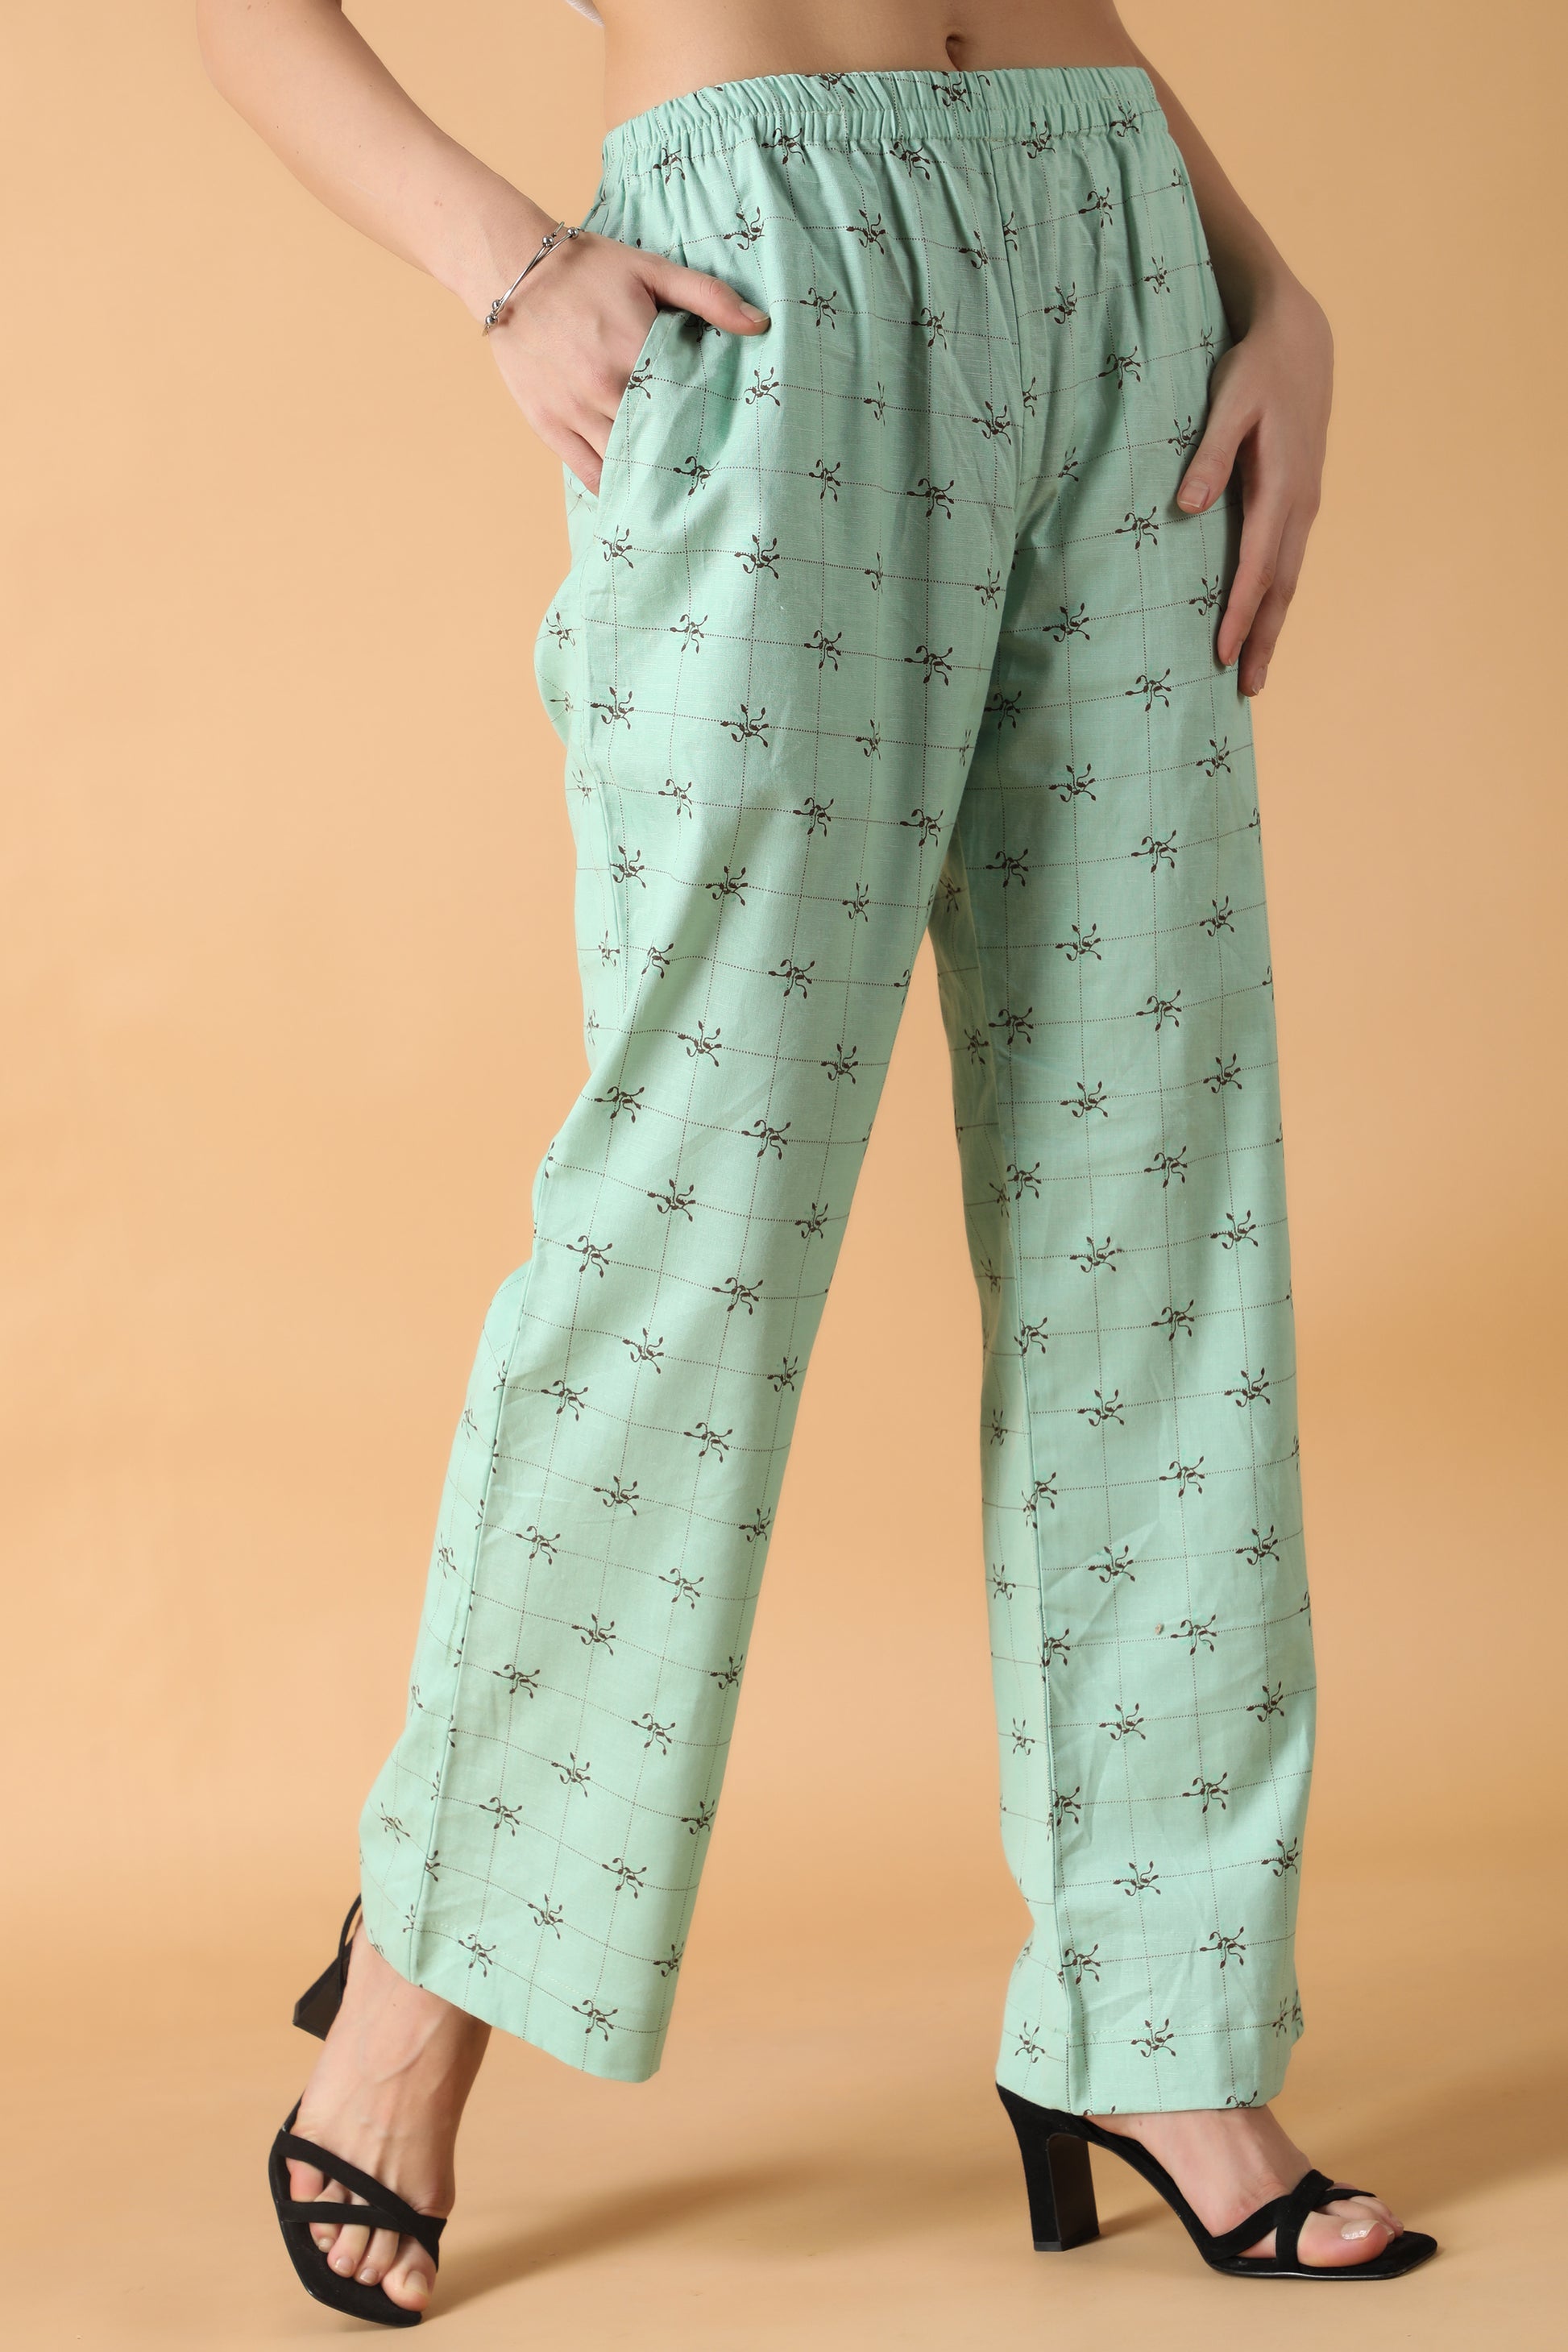 All Size, Chic Pajama, Cotton, Cotton Pajama, Double Side Pockets, Dual Side Pockets, Full Elasticized Waistline, Light Self Print, Mint Color, Mint Color Pajama, Mint Cotton Pajama, Plus Siz